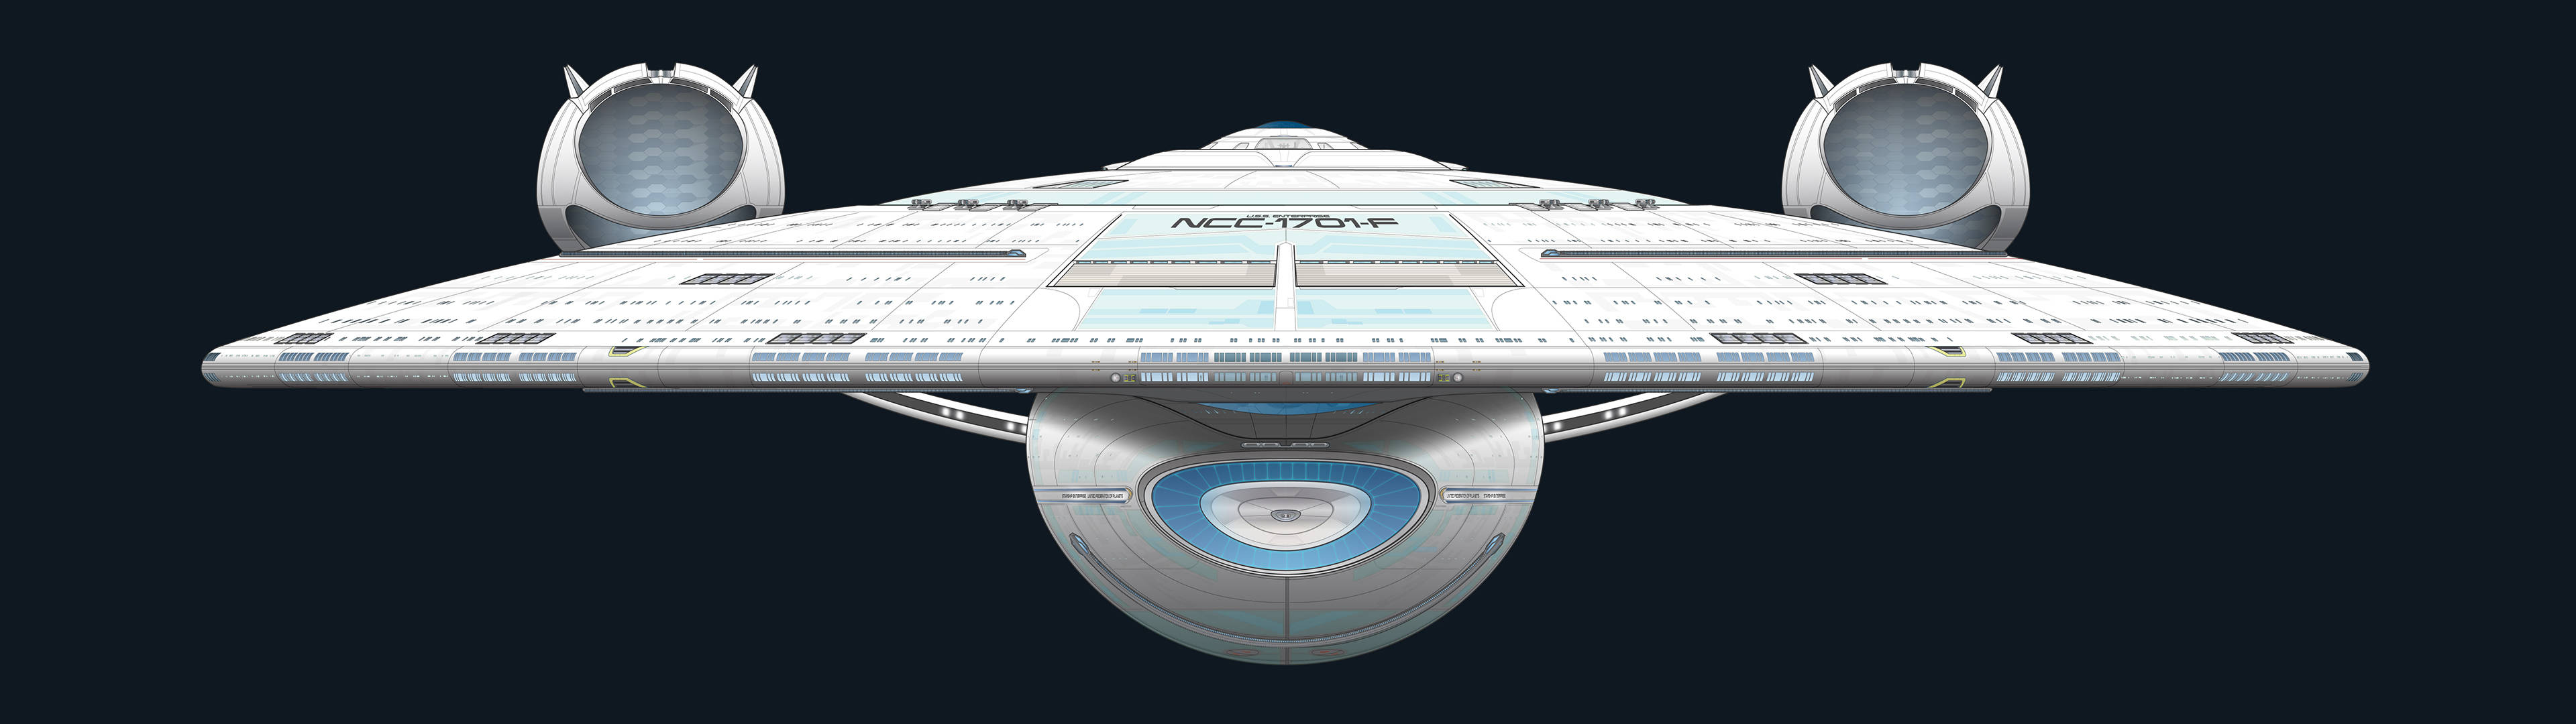 Star Trek Starship Uss Enterprise Ncc-1701-f Front View Background